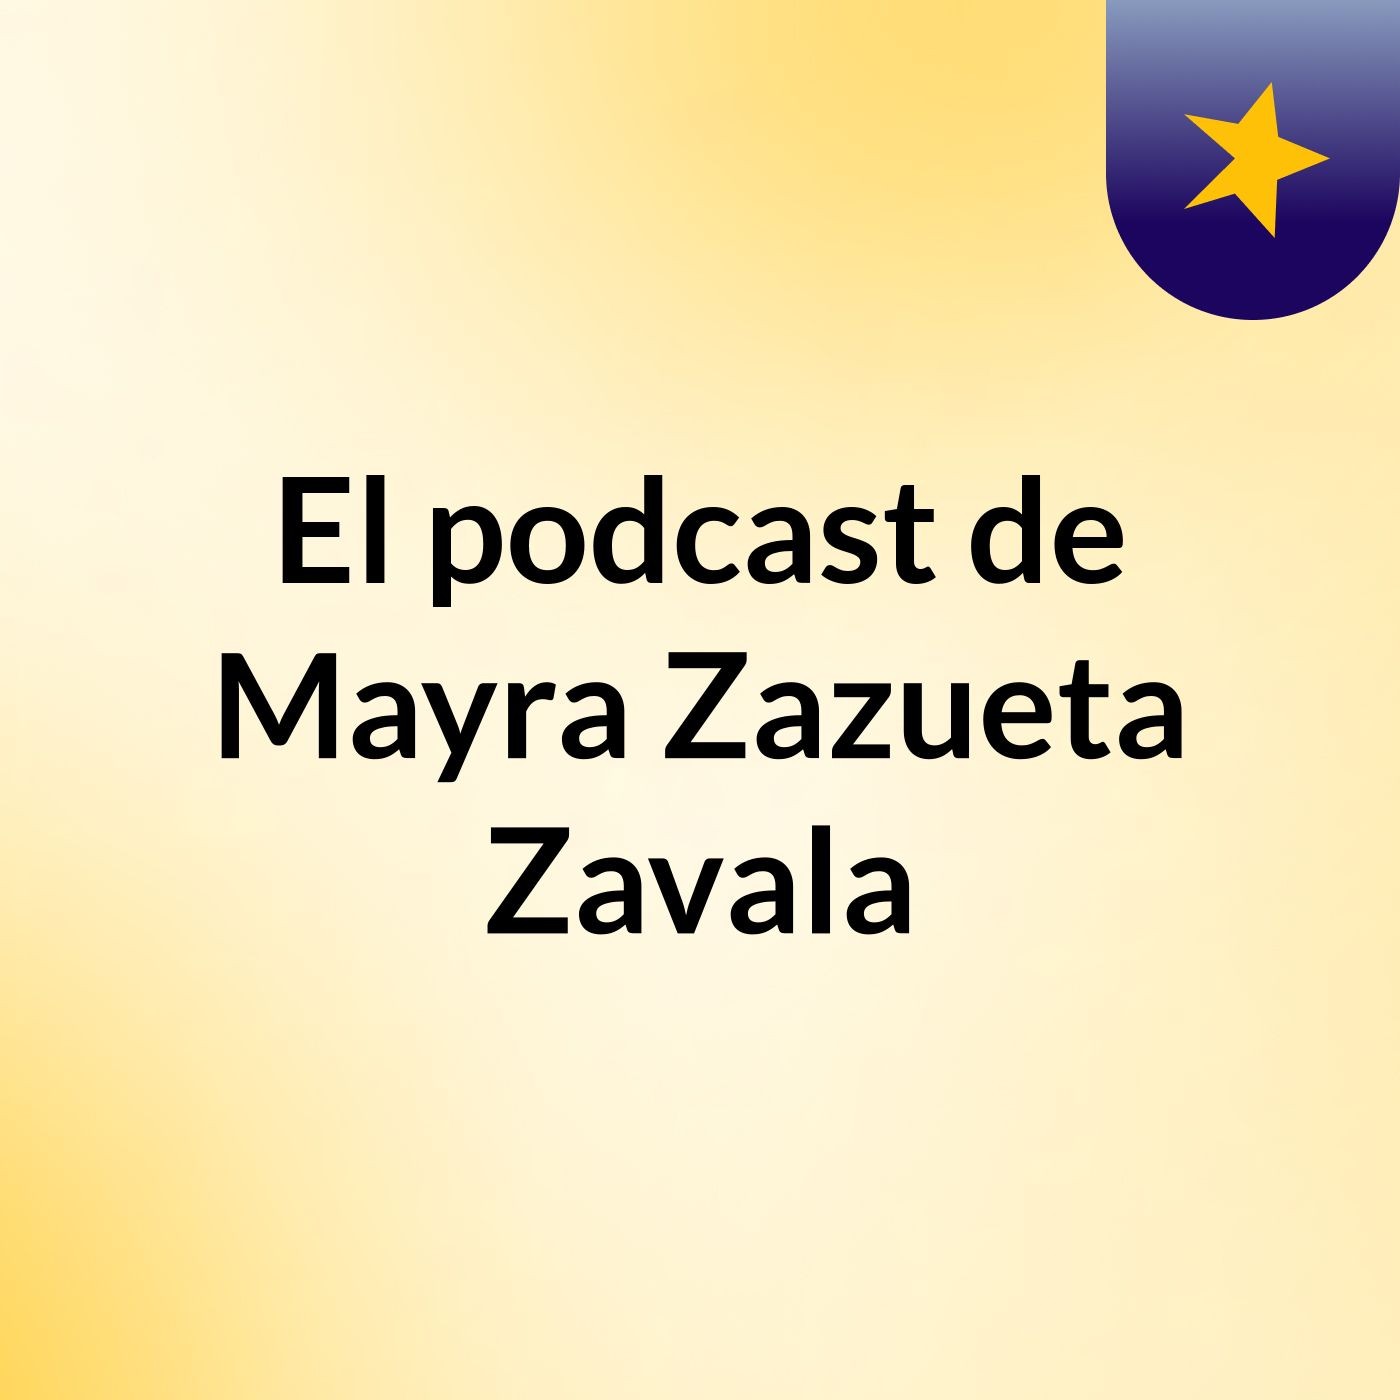 El podcast de Mayra Zazueta Zavala